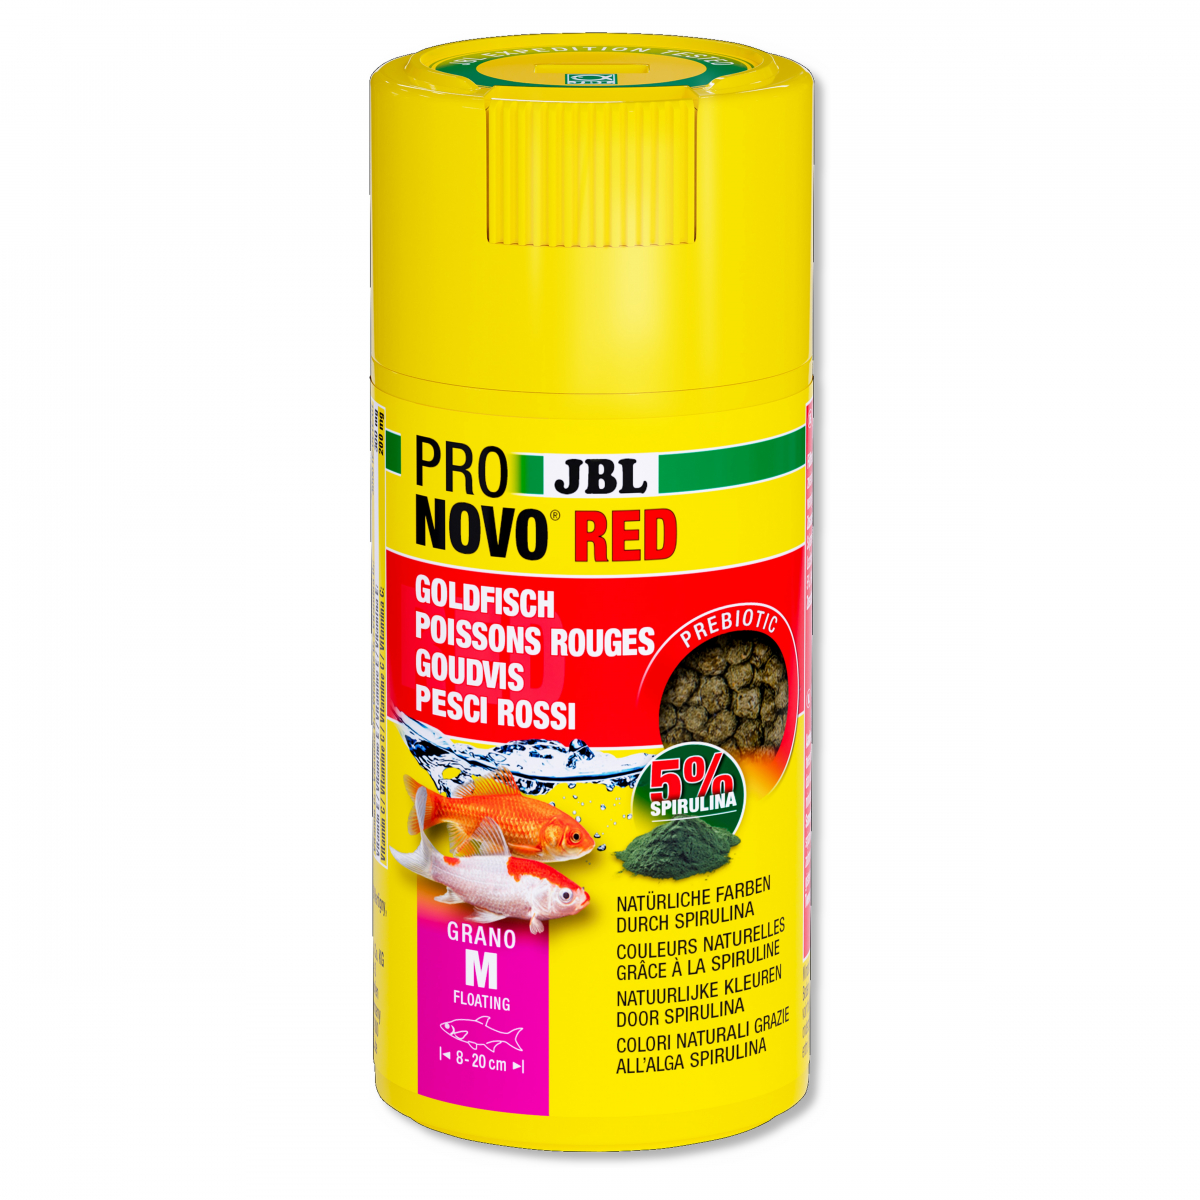 JBL Pronovo Red Grano M gránulos para goldfish